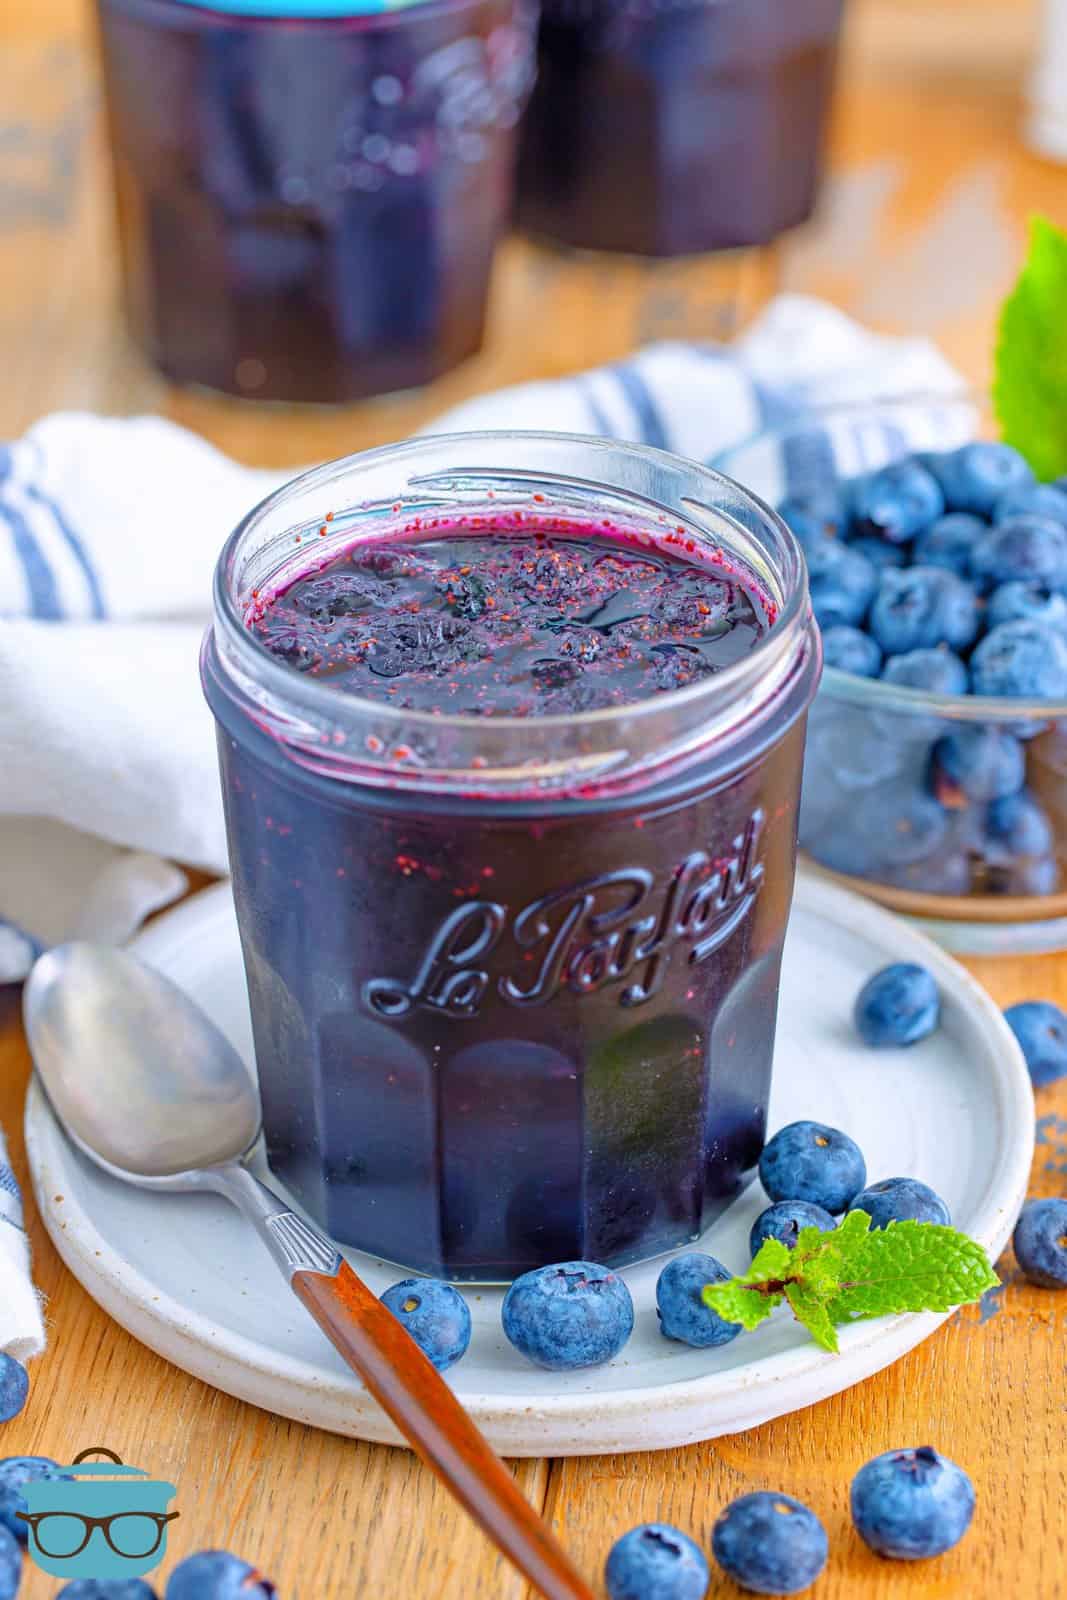 A jar of homemade blueberry jam on a plate.